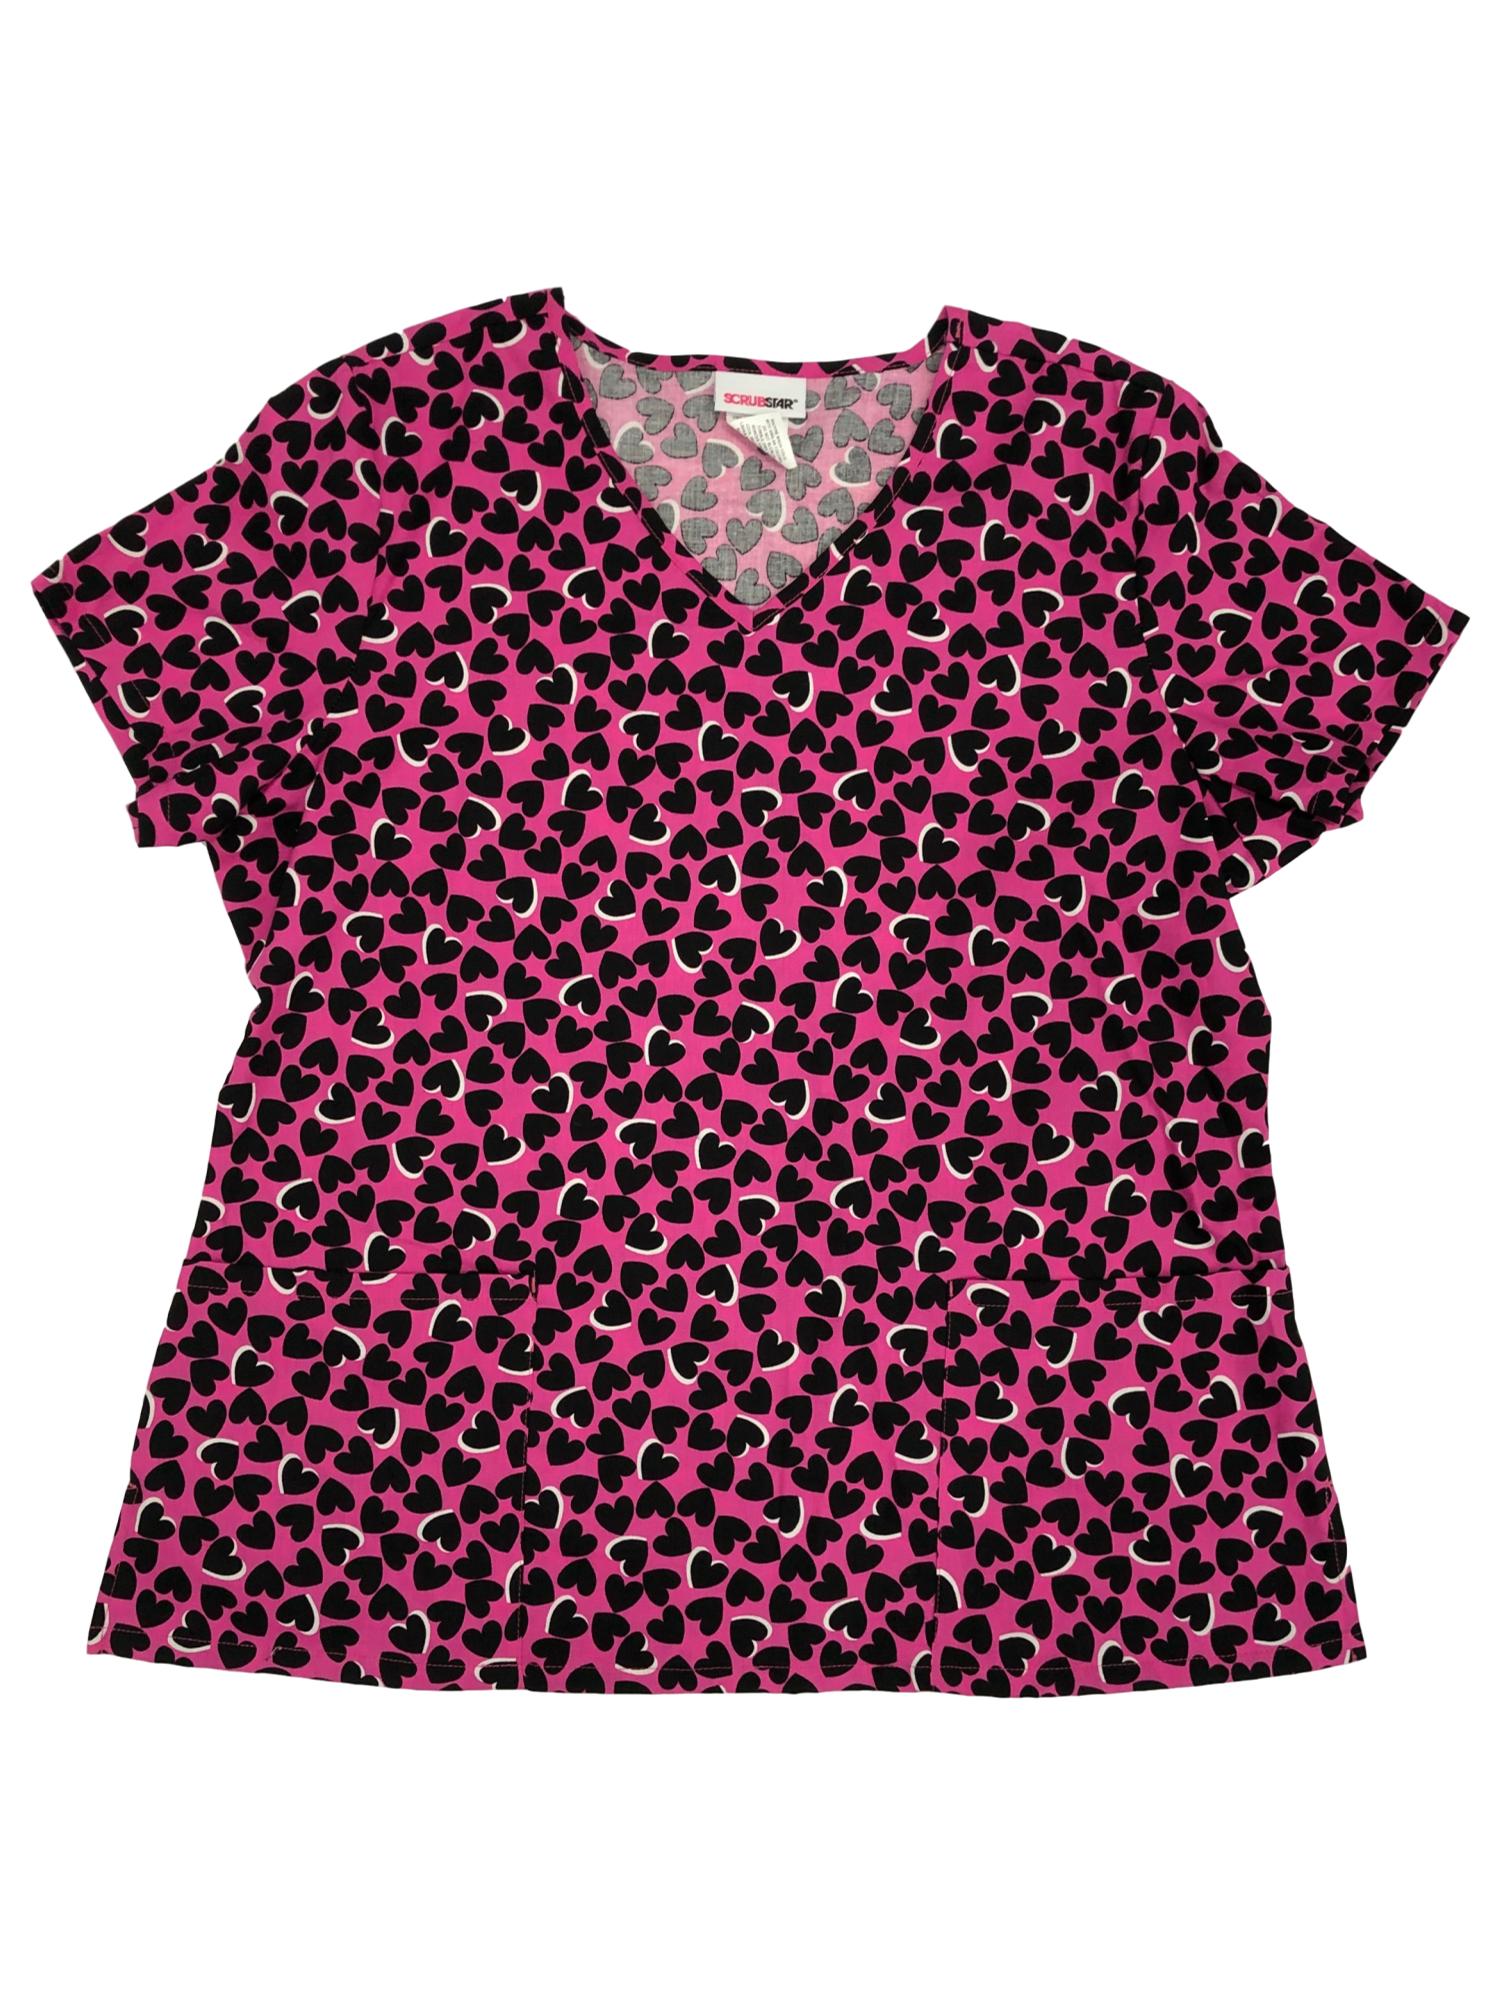 ScrubStar Womens Pink & Black Hearts Valentines Day Medical Smock Scrubs Shirt Top